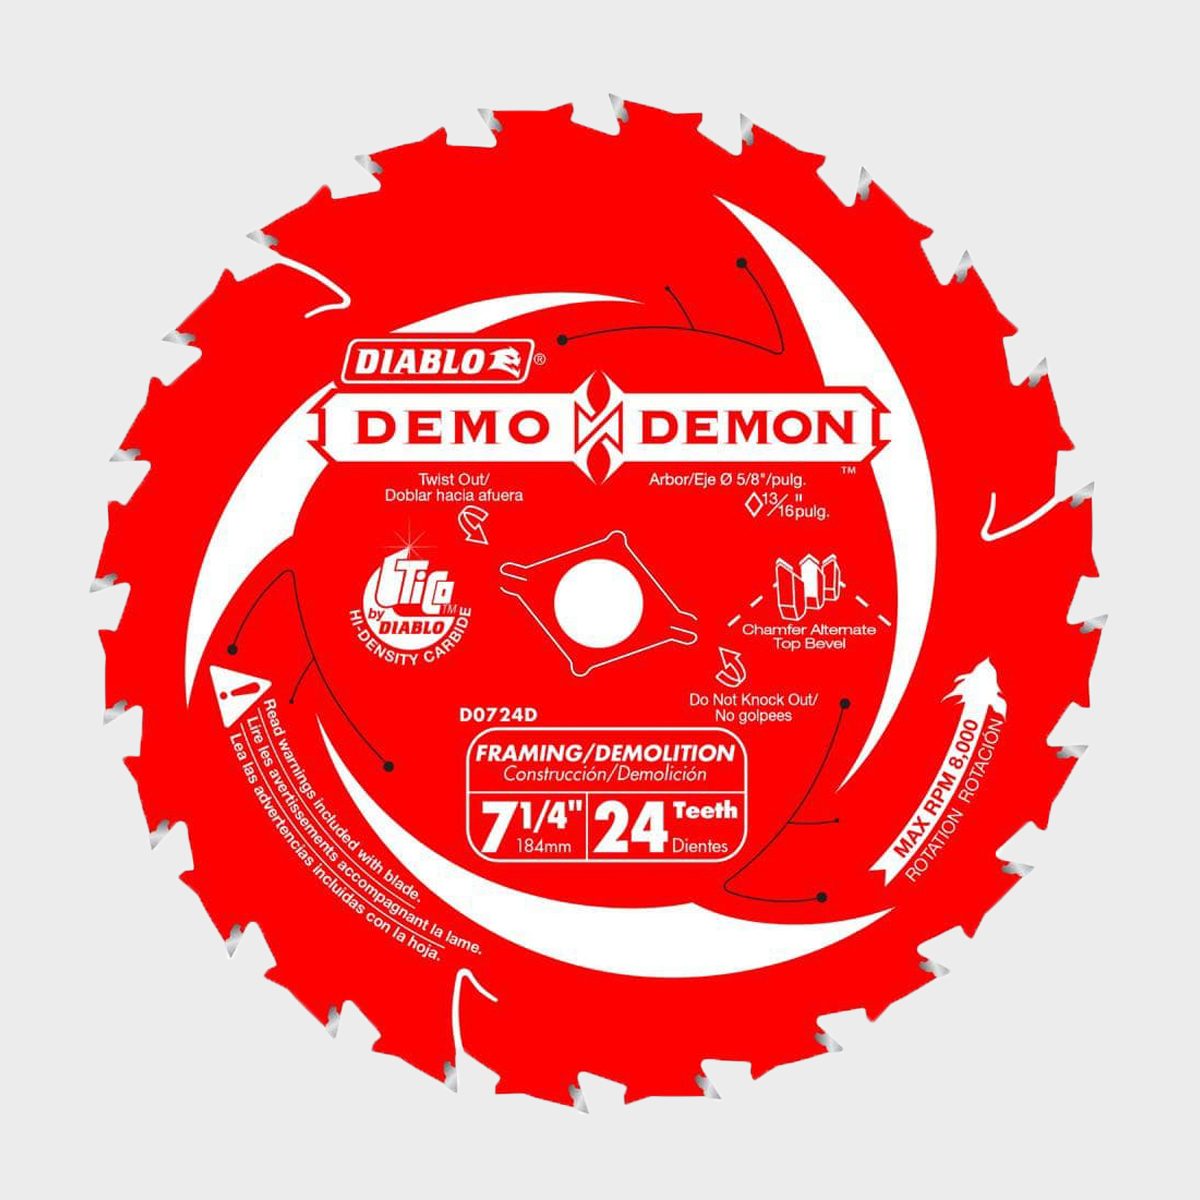 Diablo Demo Demon Ecomm Homedepot.com